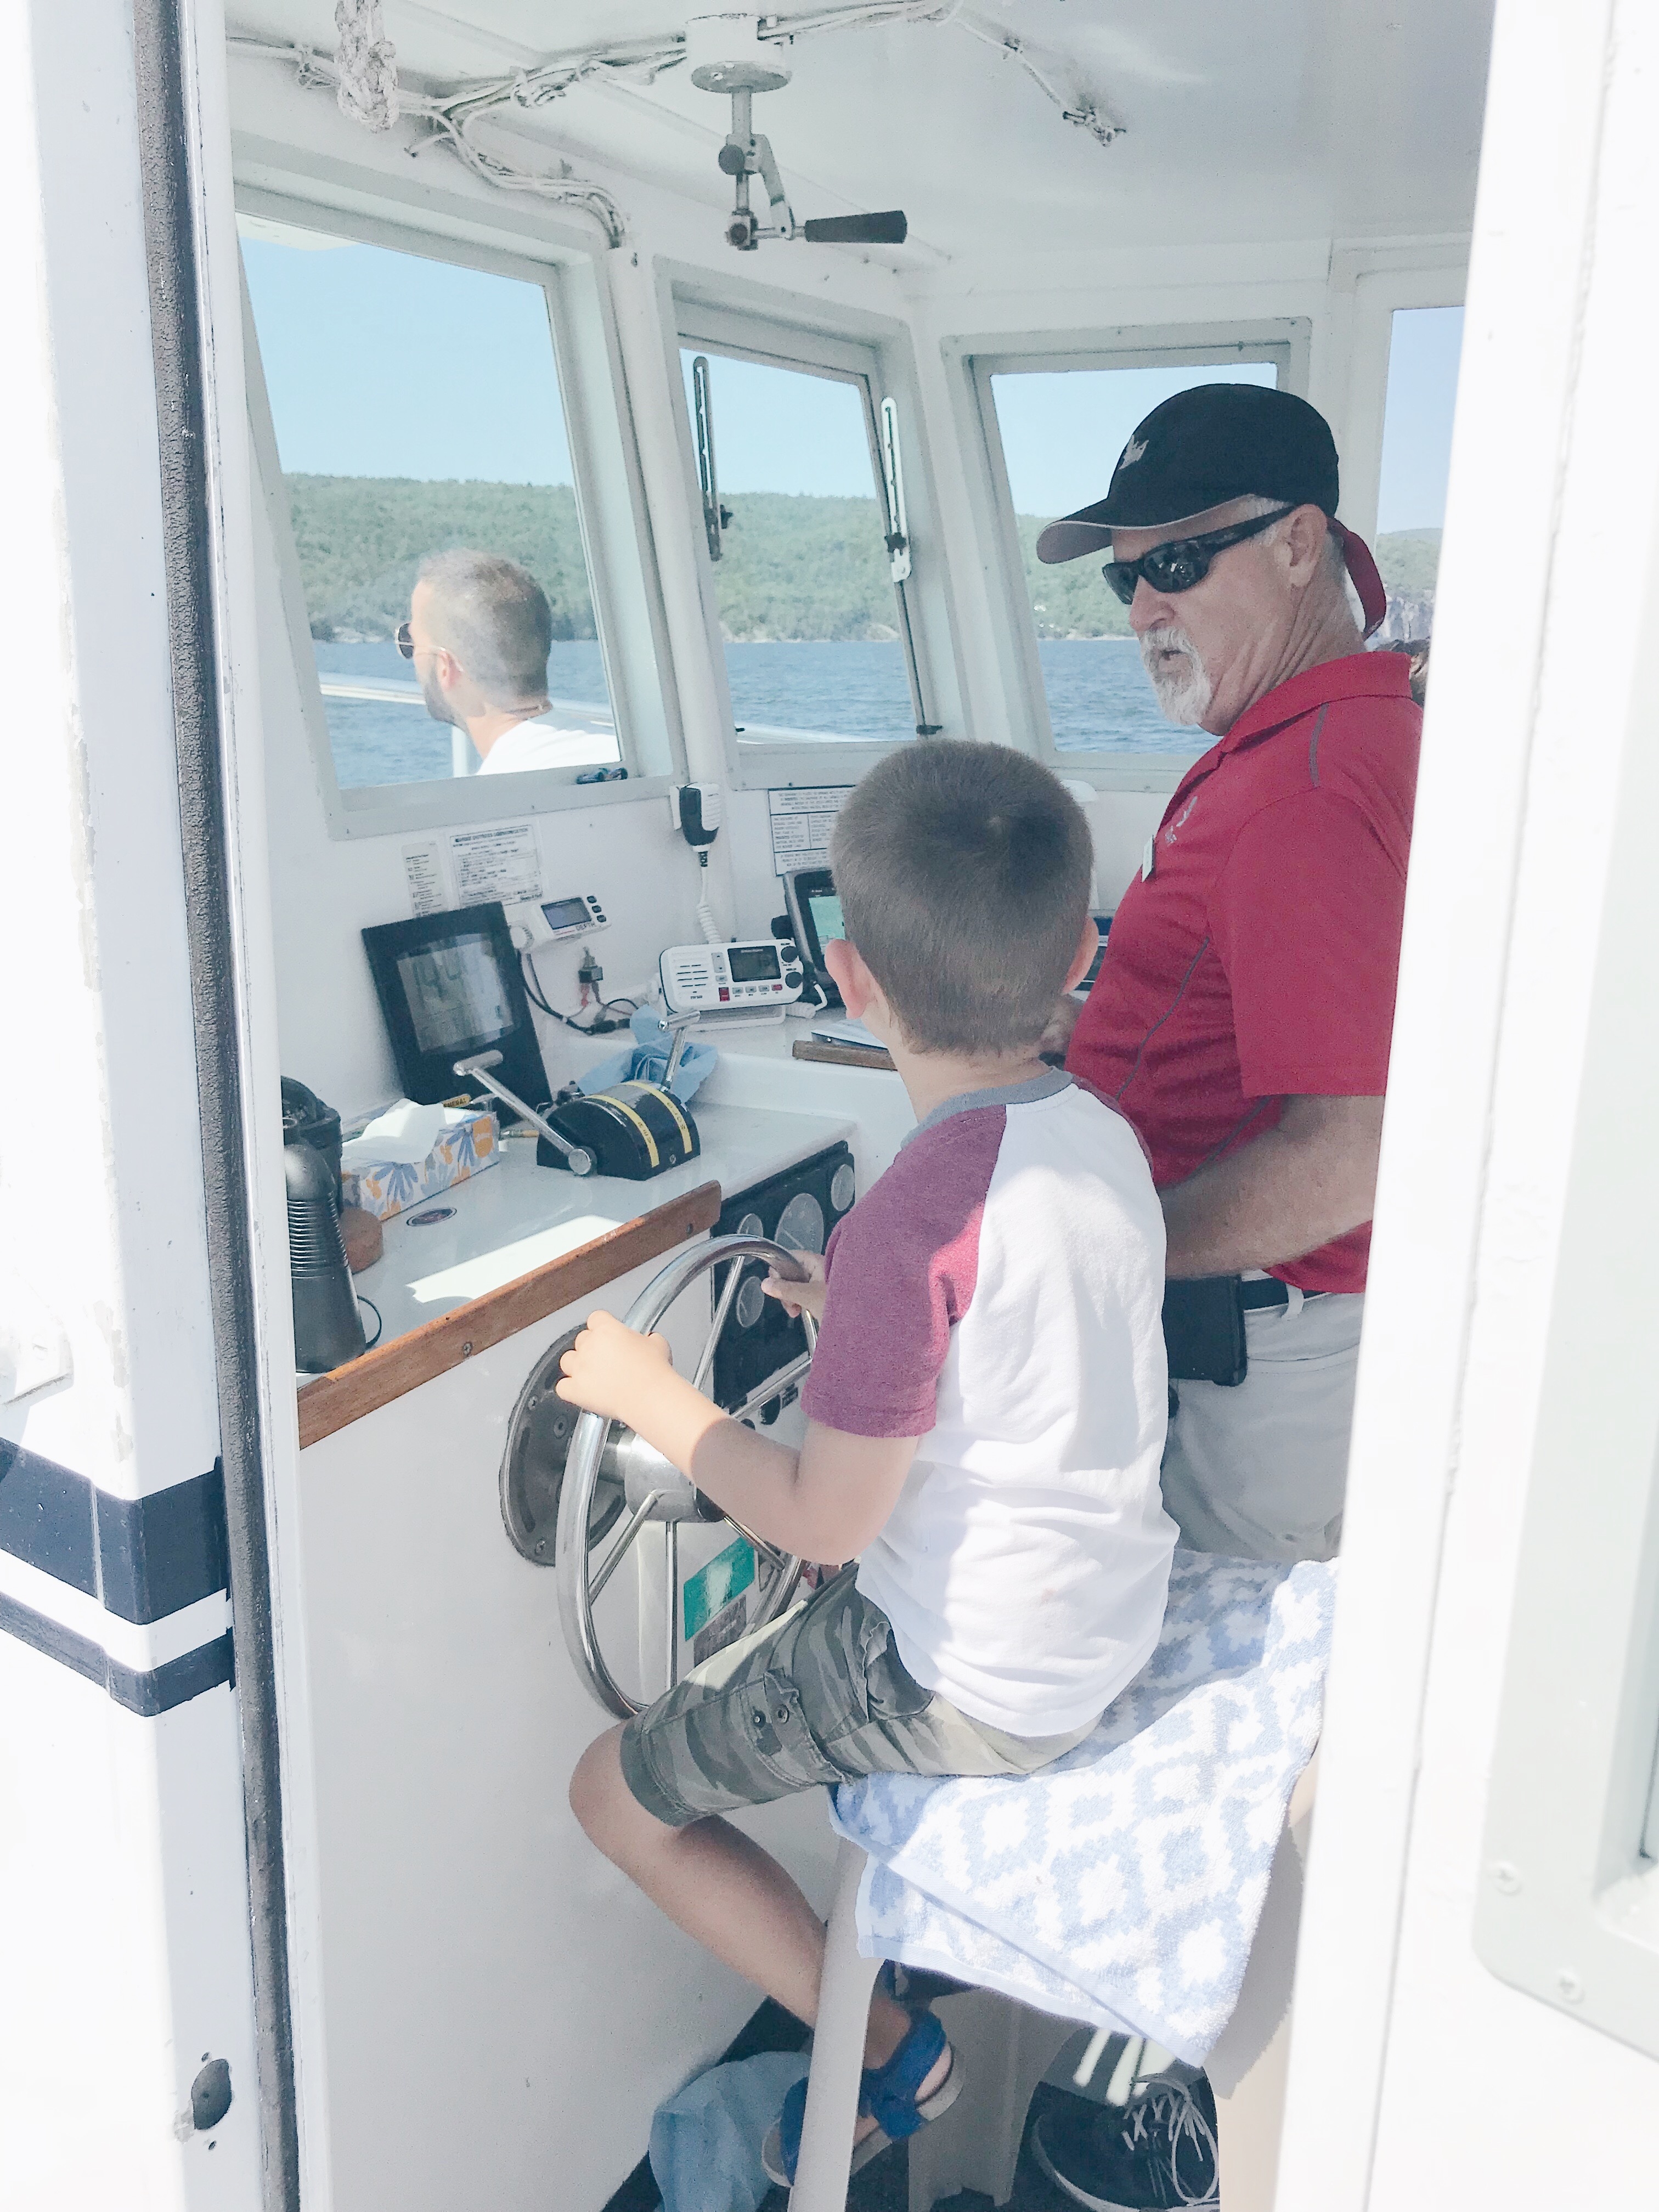 Basin Harbor Resort Review - Driving the Boat